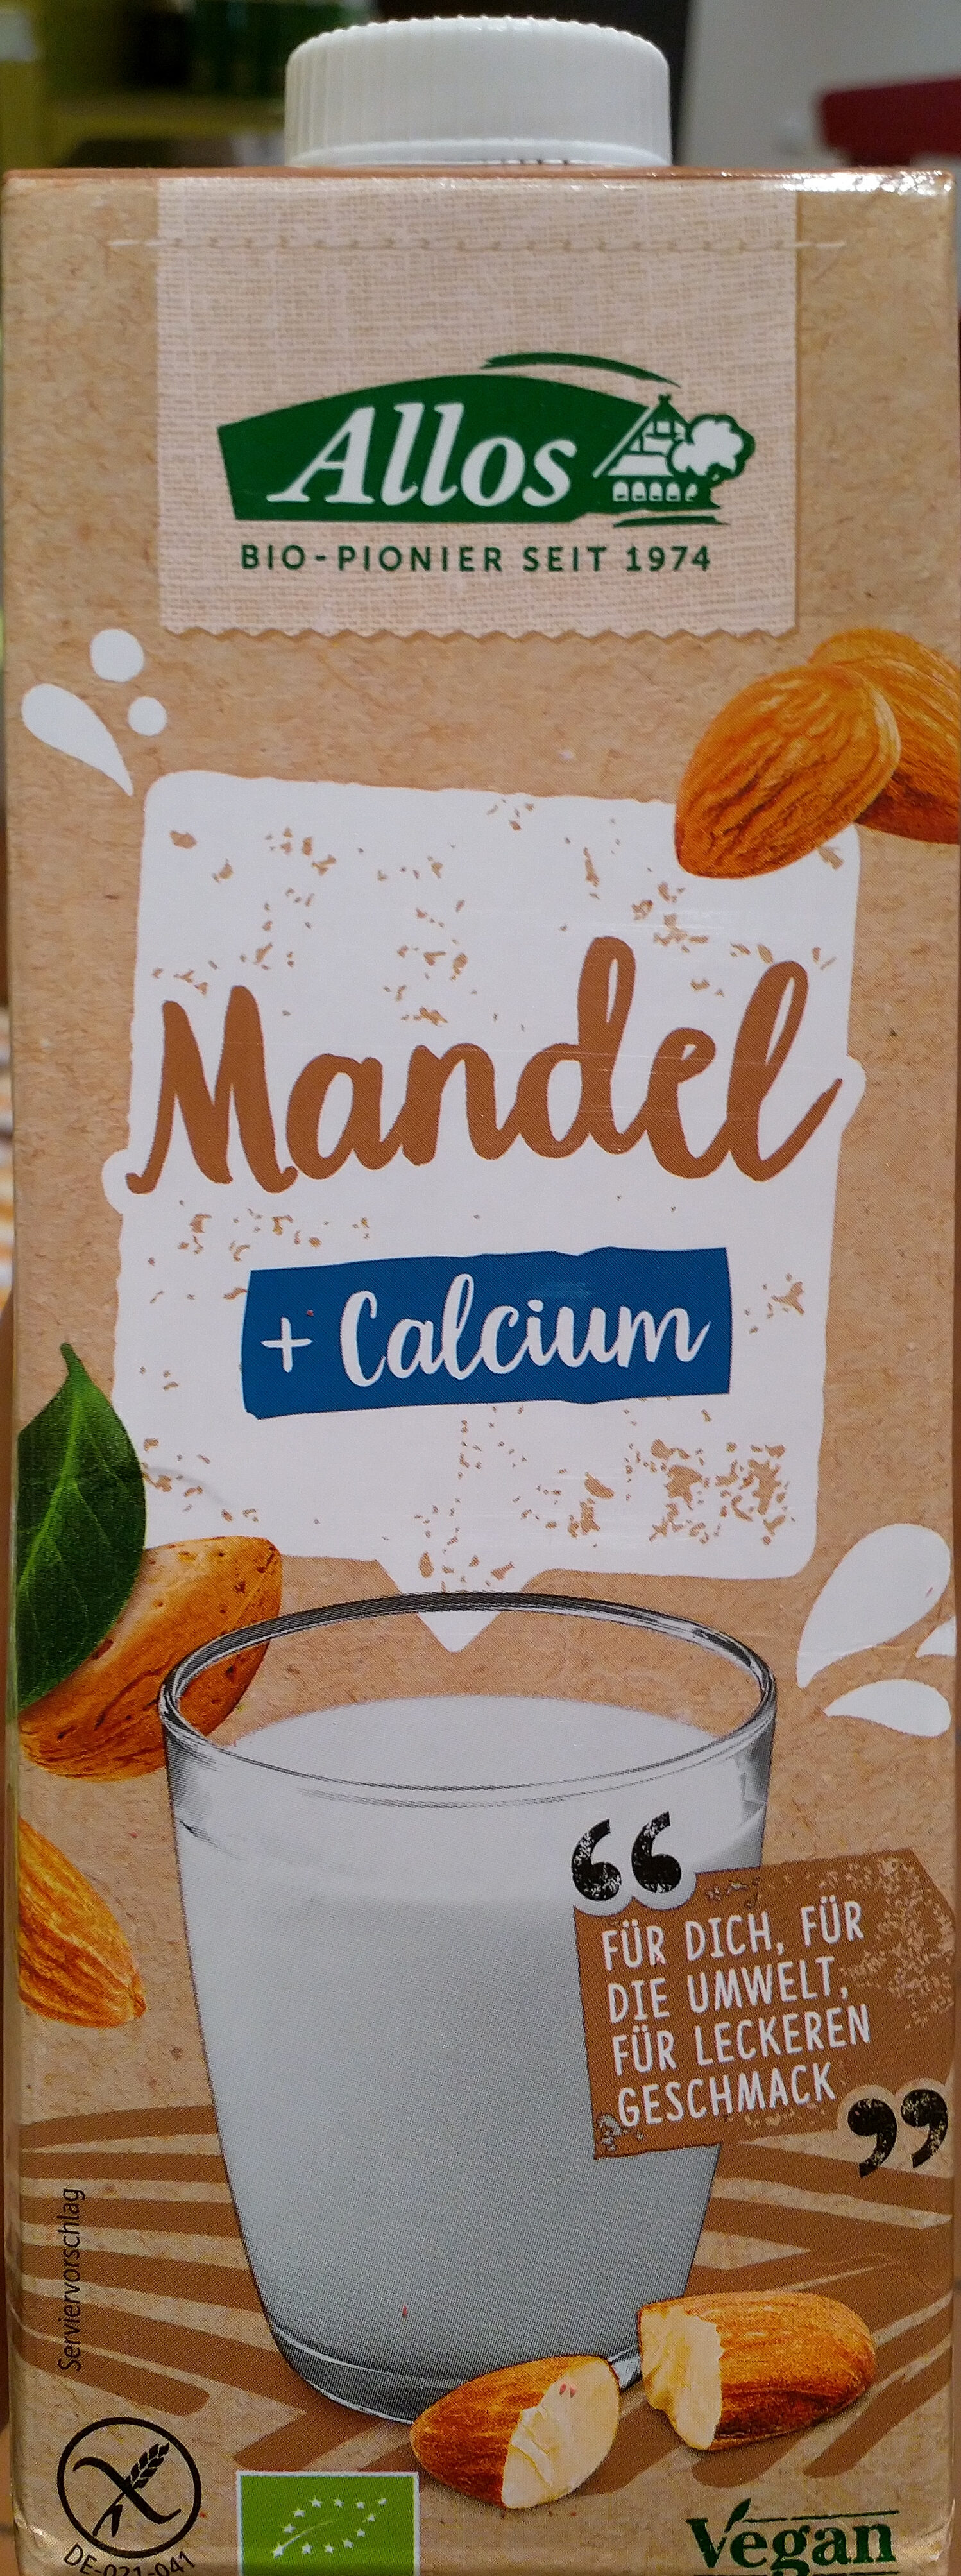 Allos Mandel Drink + Calcium - Produkt